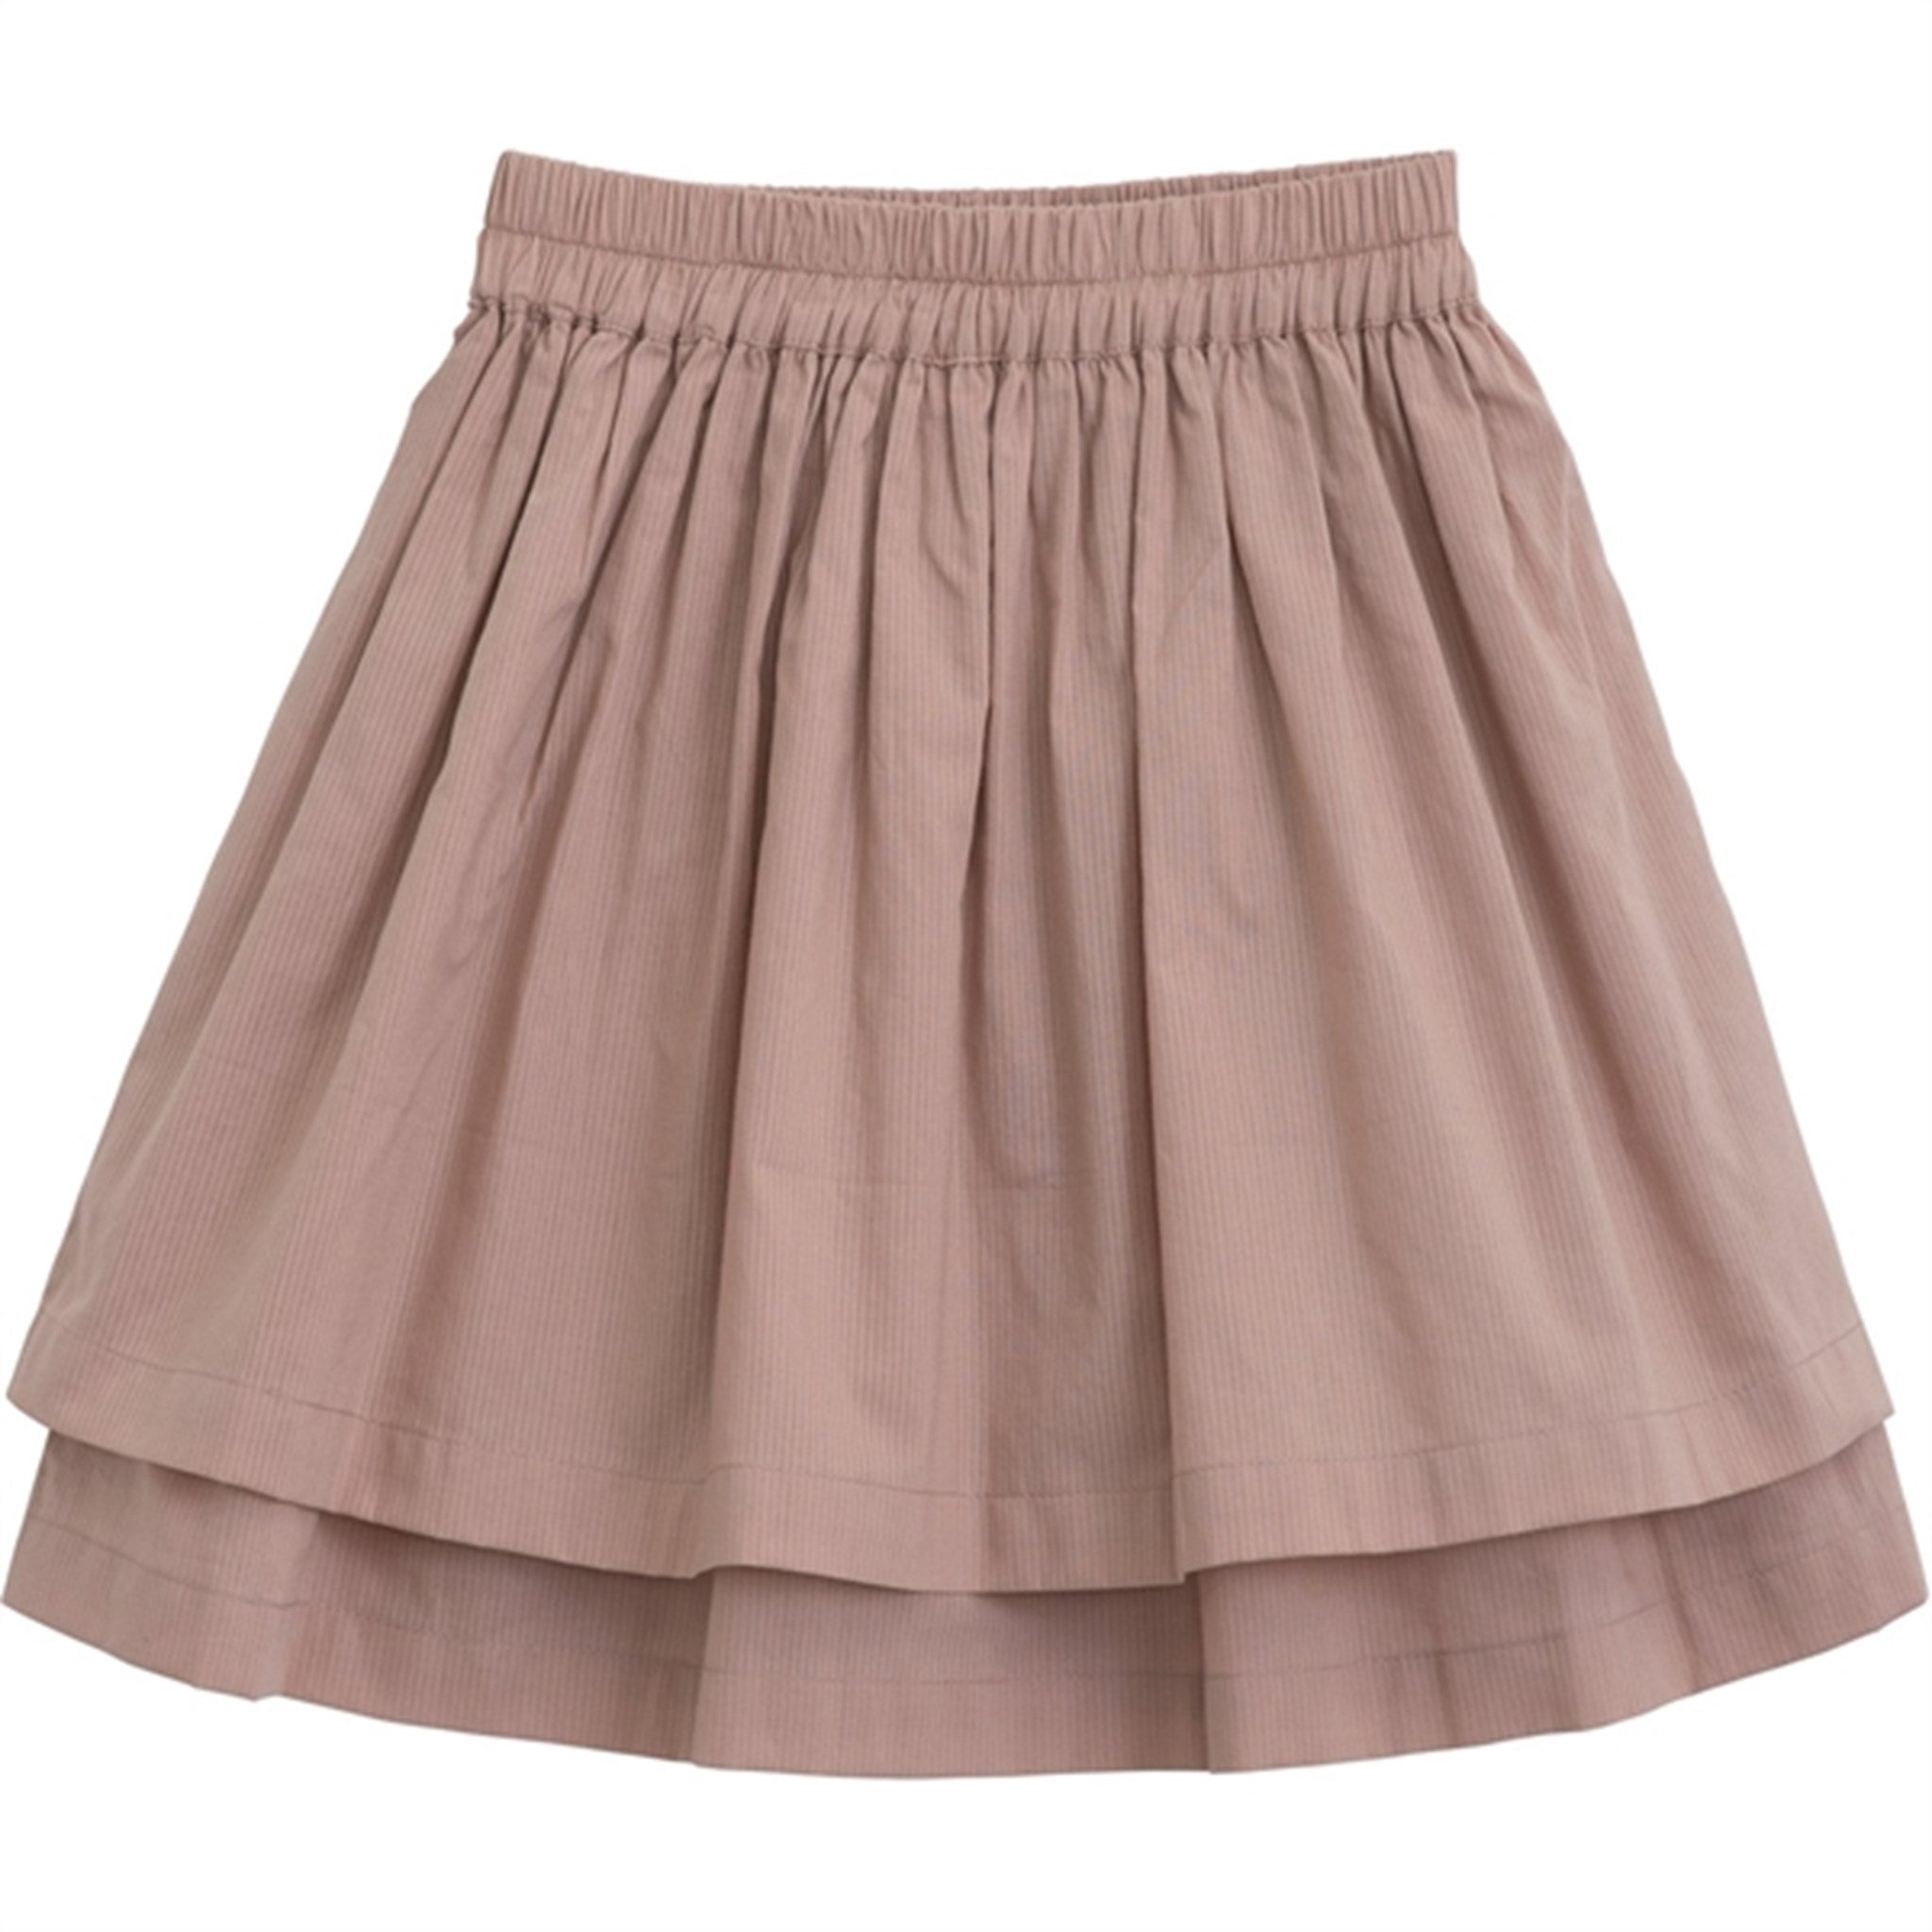 Serendipity Almond Skirt